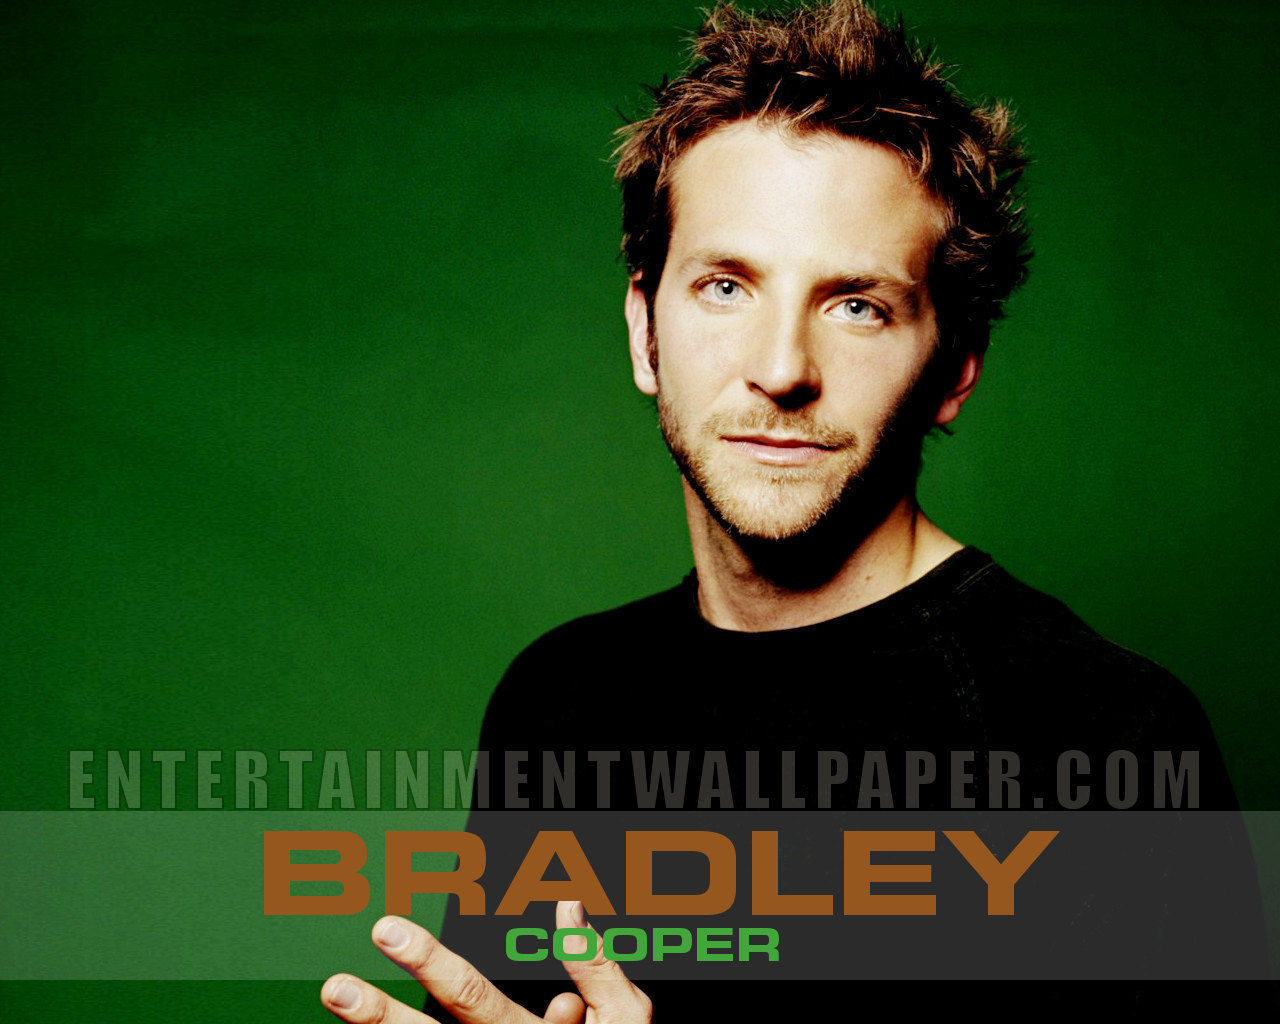 bradley cooper tapete,grün,stirn,cool,schriftart,t shirt